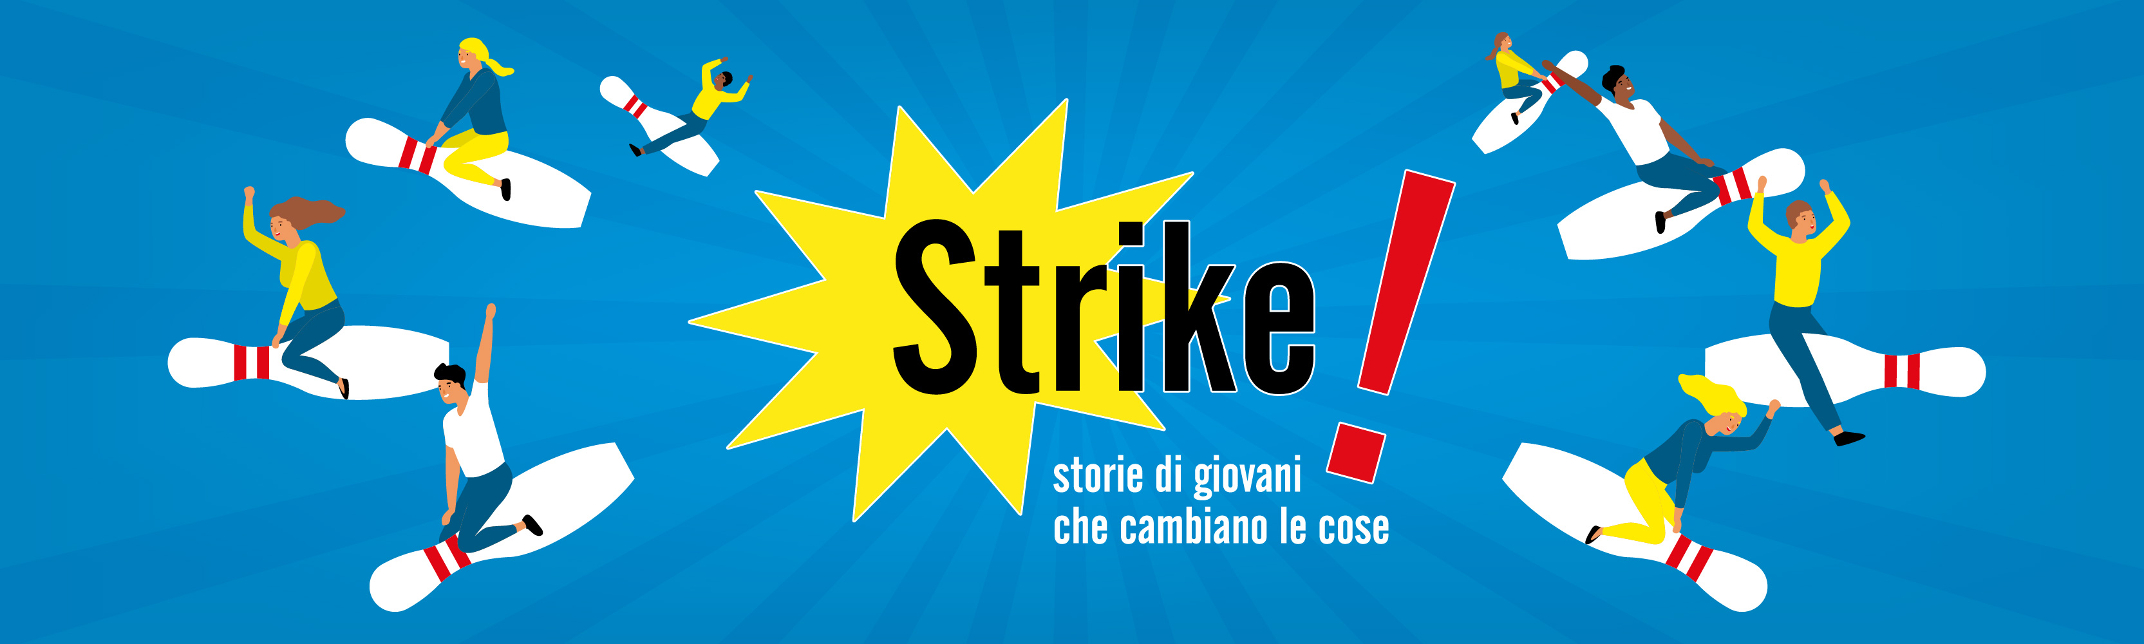 strike_2